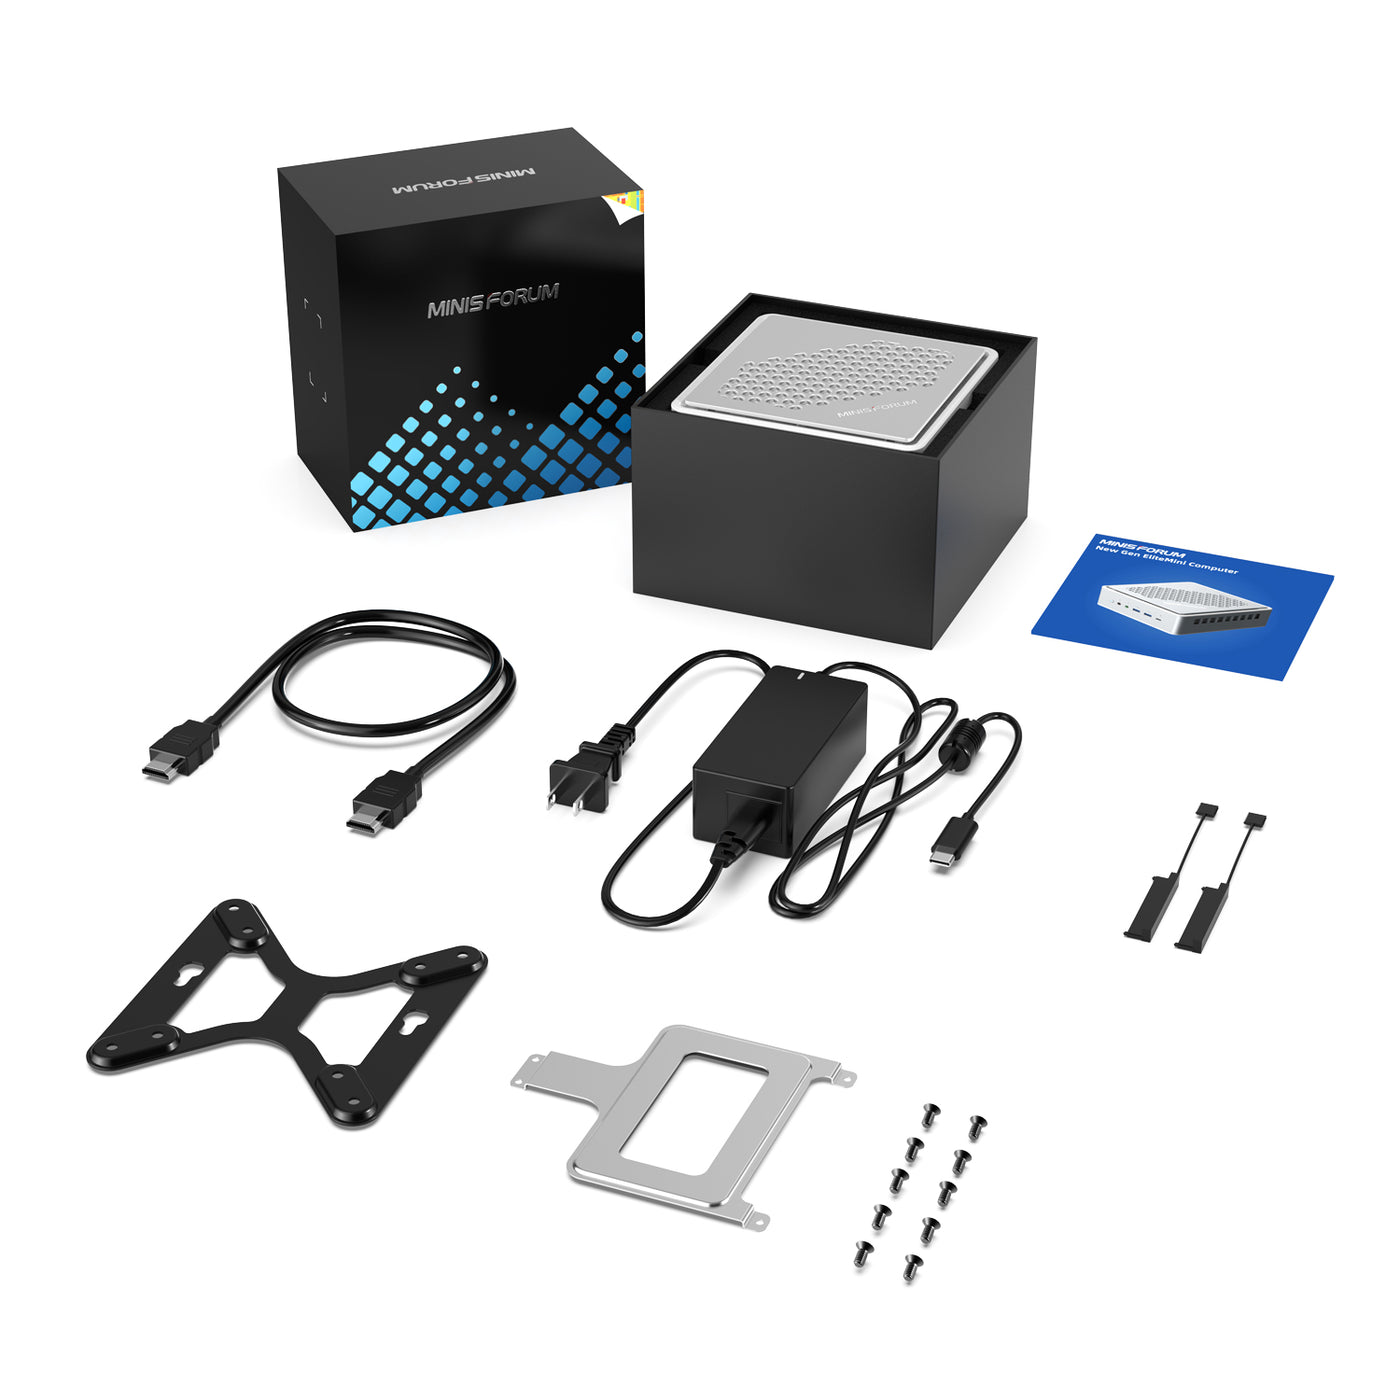 All accessories for Minisforum EliteMini TH50 Mini PC